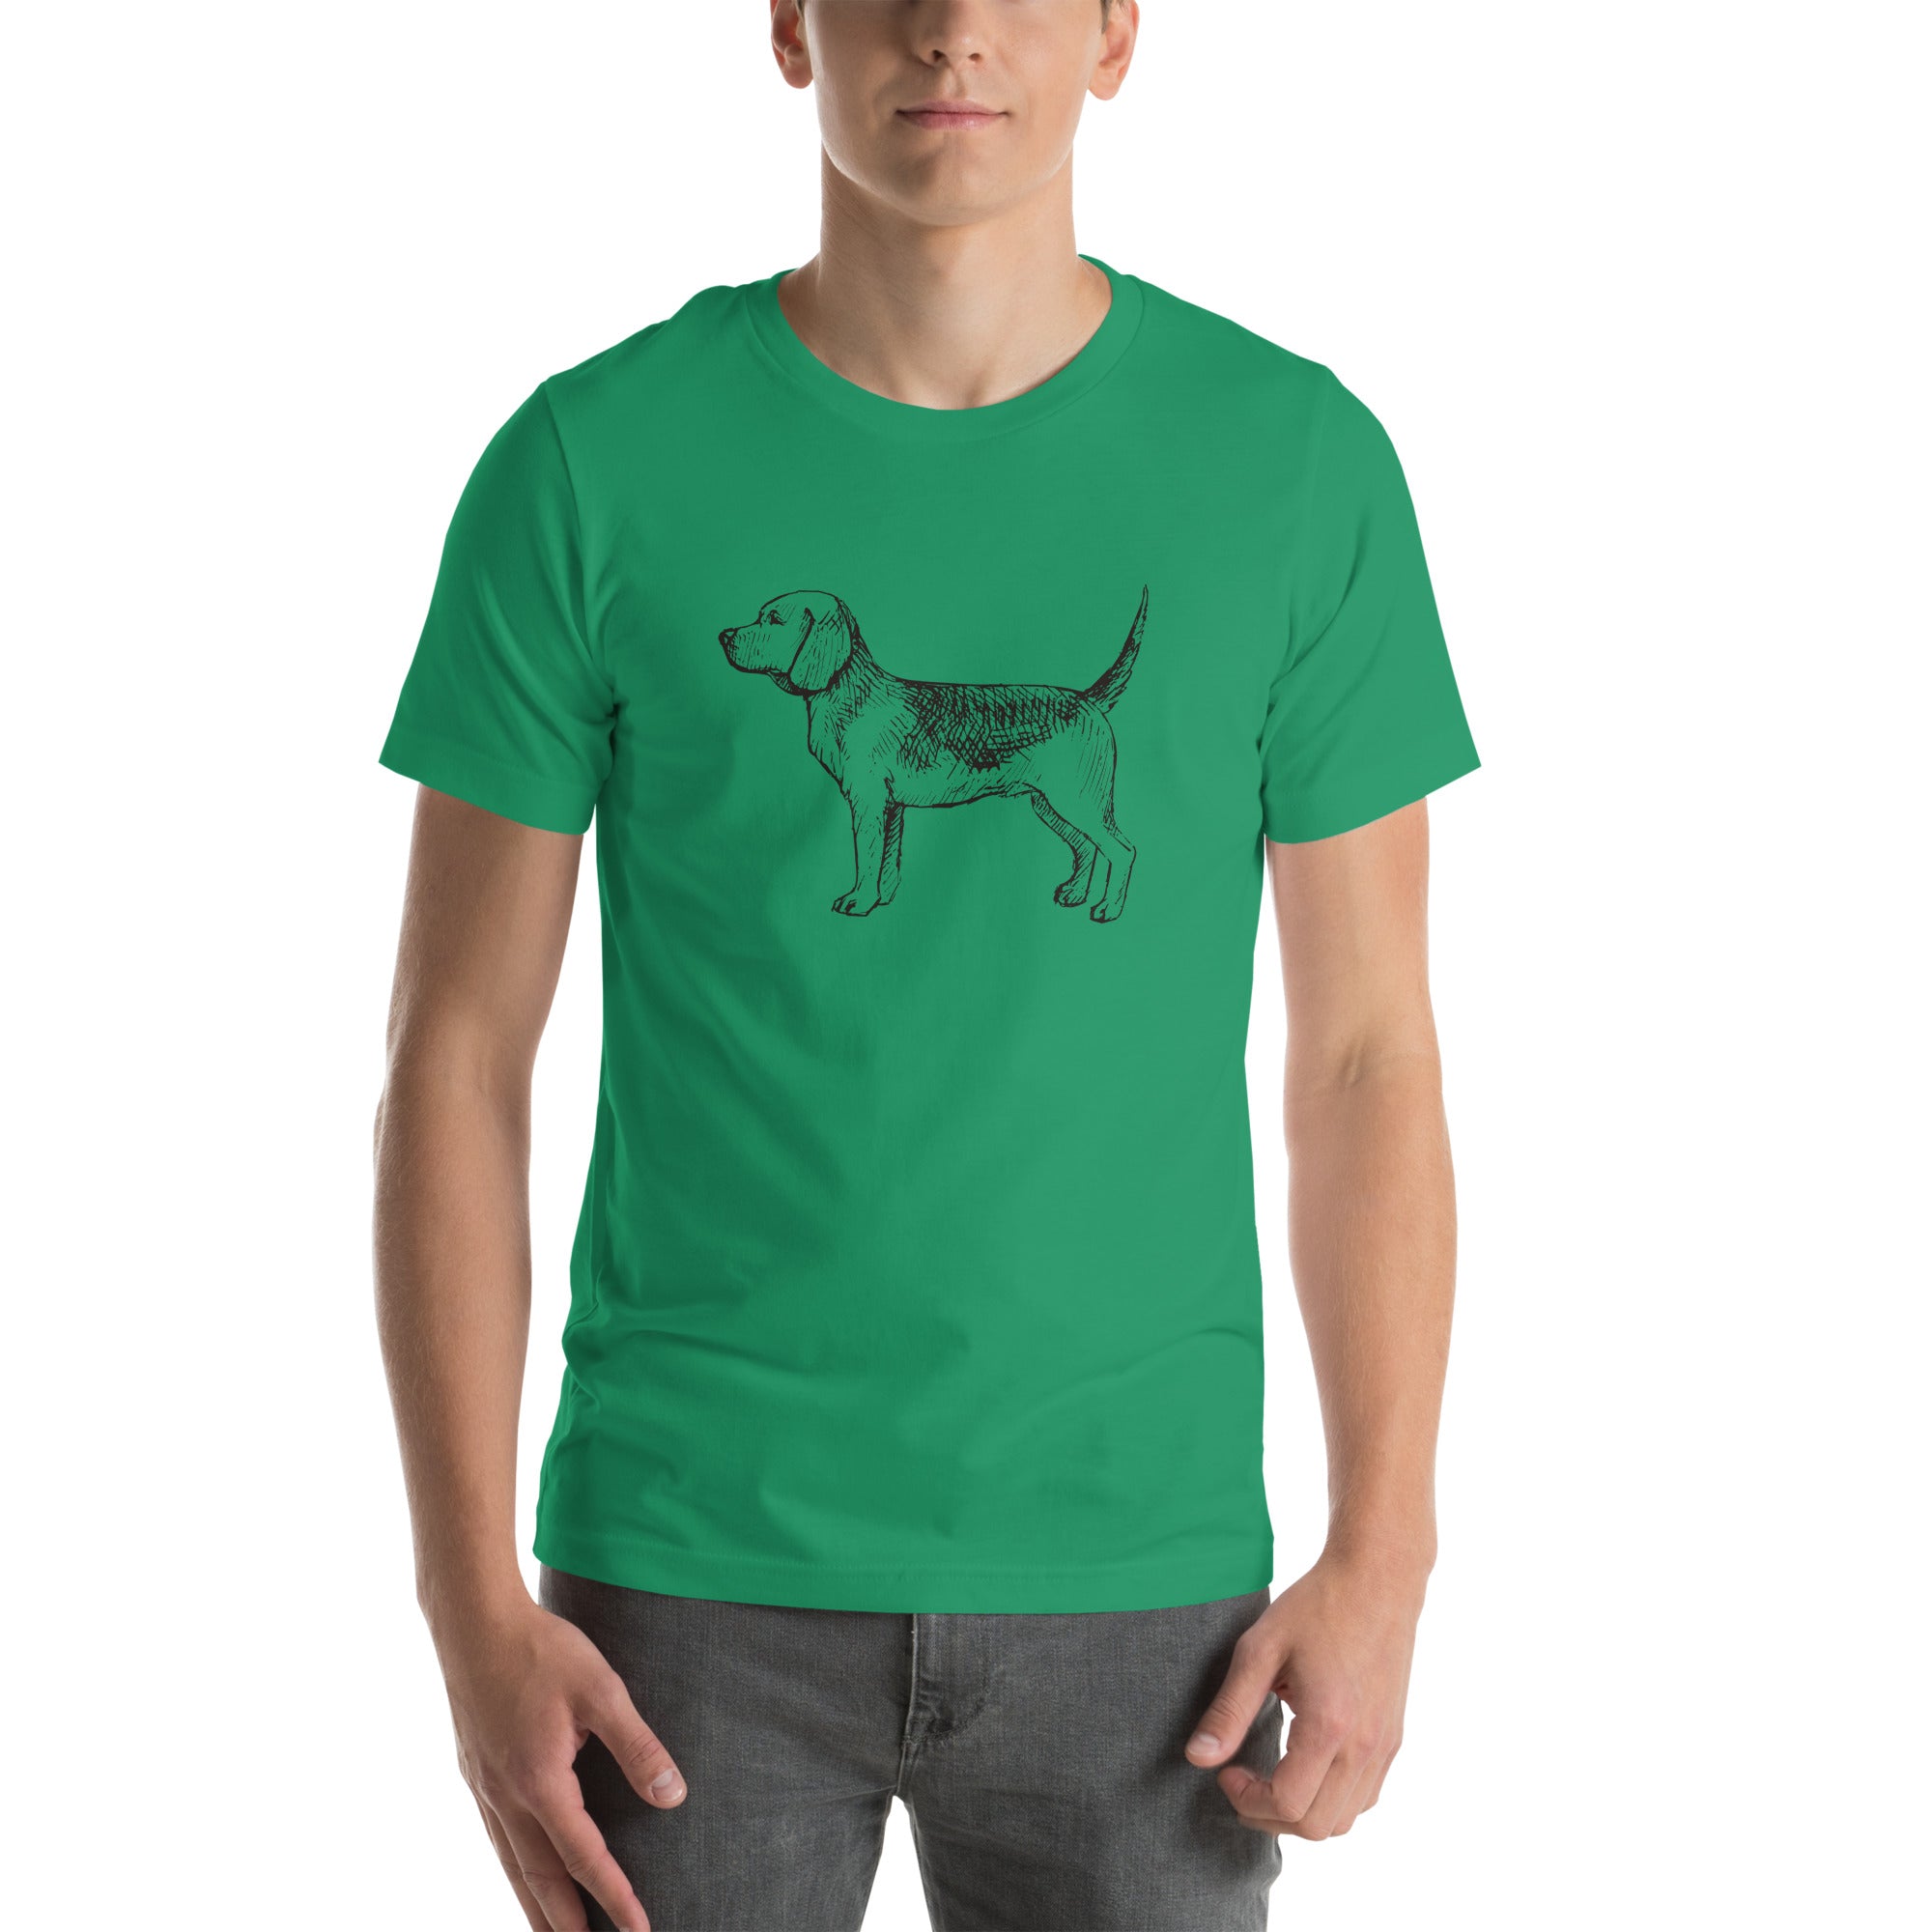 Beagle T-Shirt